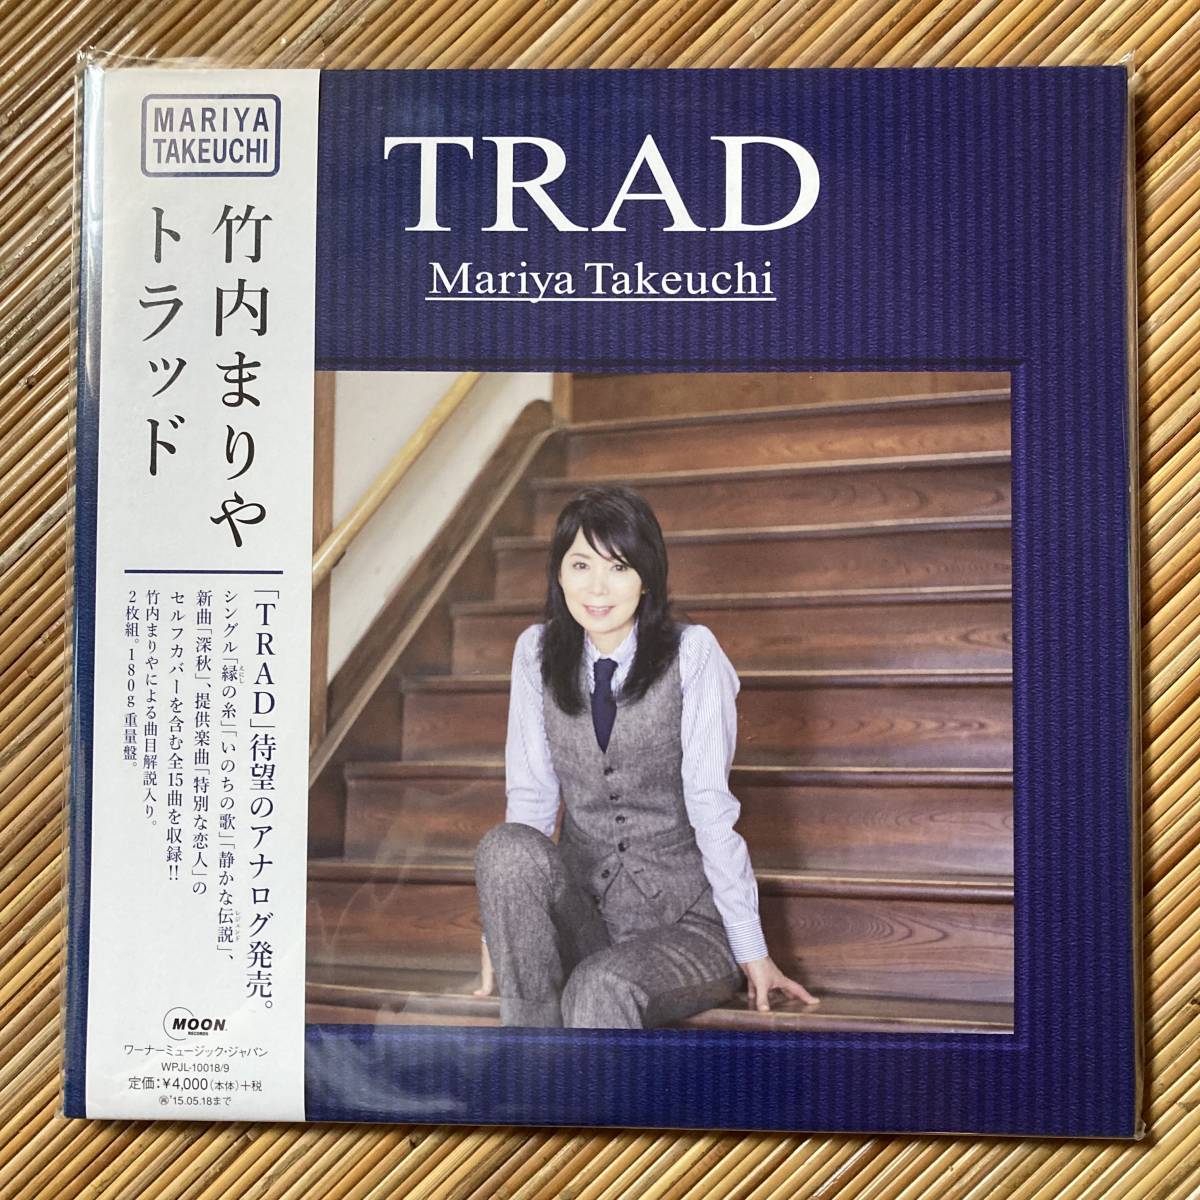 { ultimate beautiful goods .*ALL2 sheets set } Takeuchi Mariya [valaeti][ request ][ trad ]LP~30 anniversary commemoration /Anniversary Edition/ Yamashita Tatsuro /..